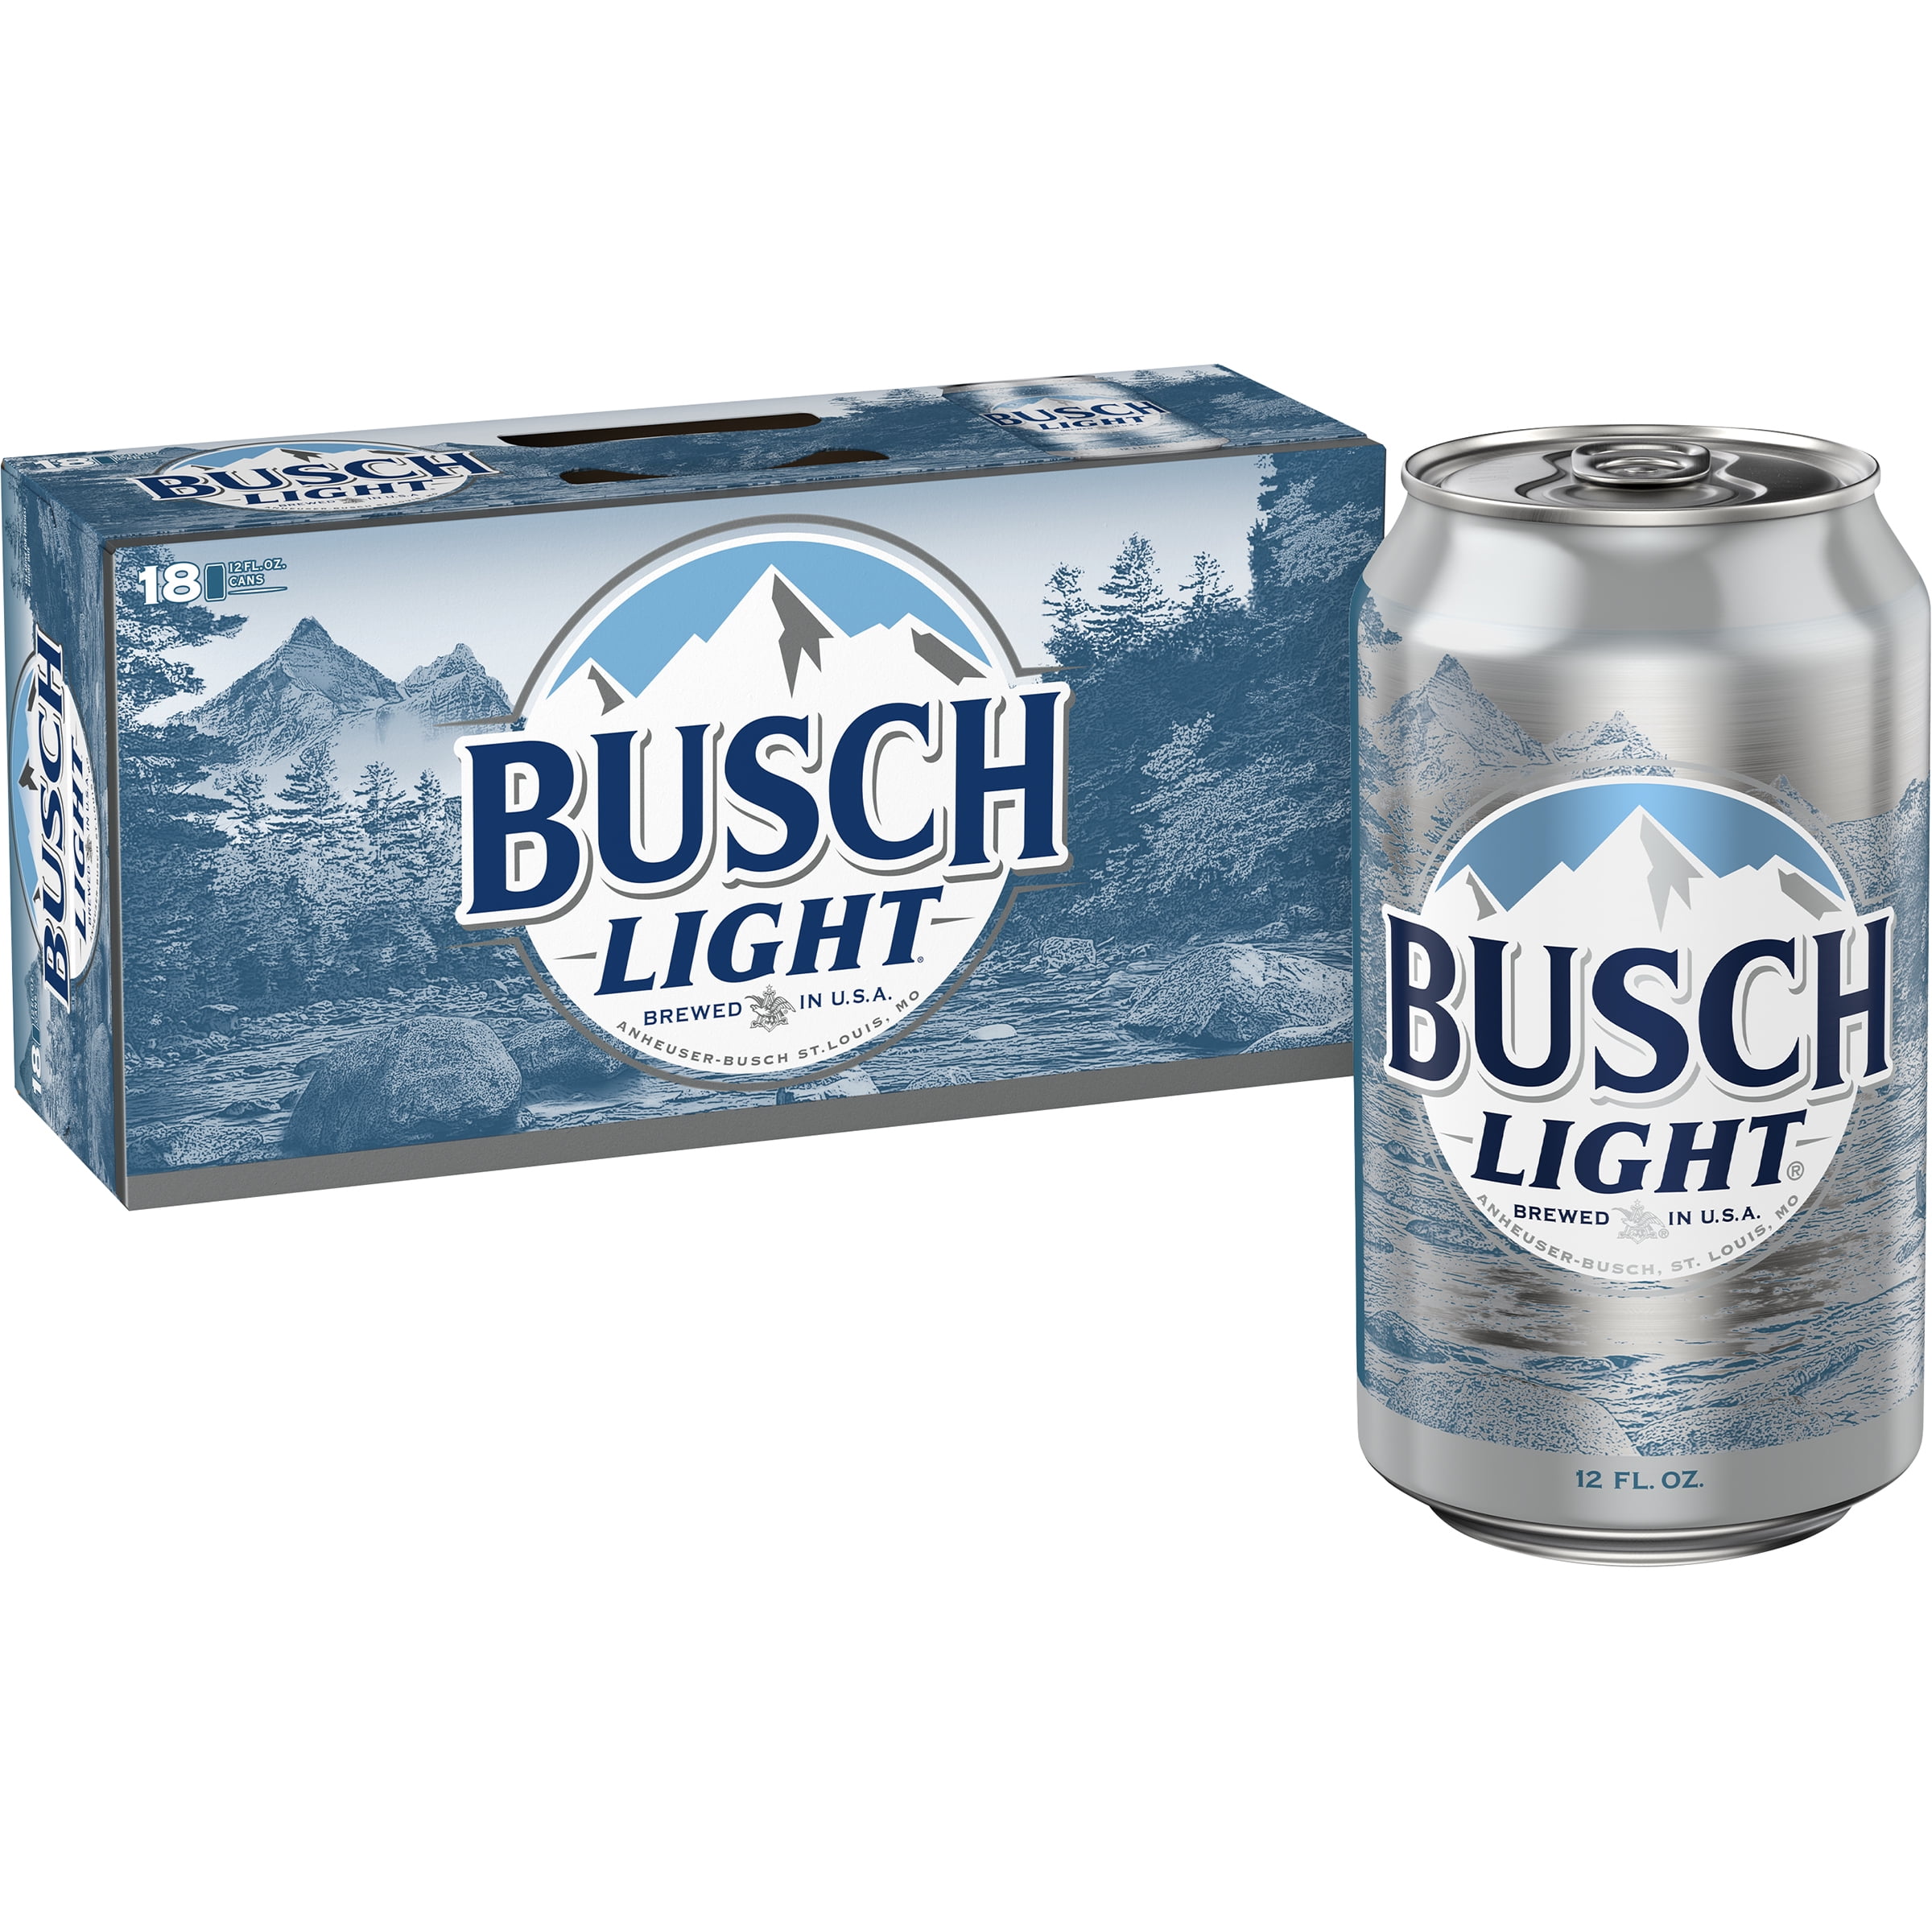 Busch Light Beer 18 Pack 12 Fl Oz Cans 42% ABV.